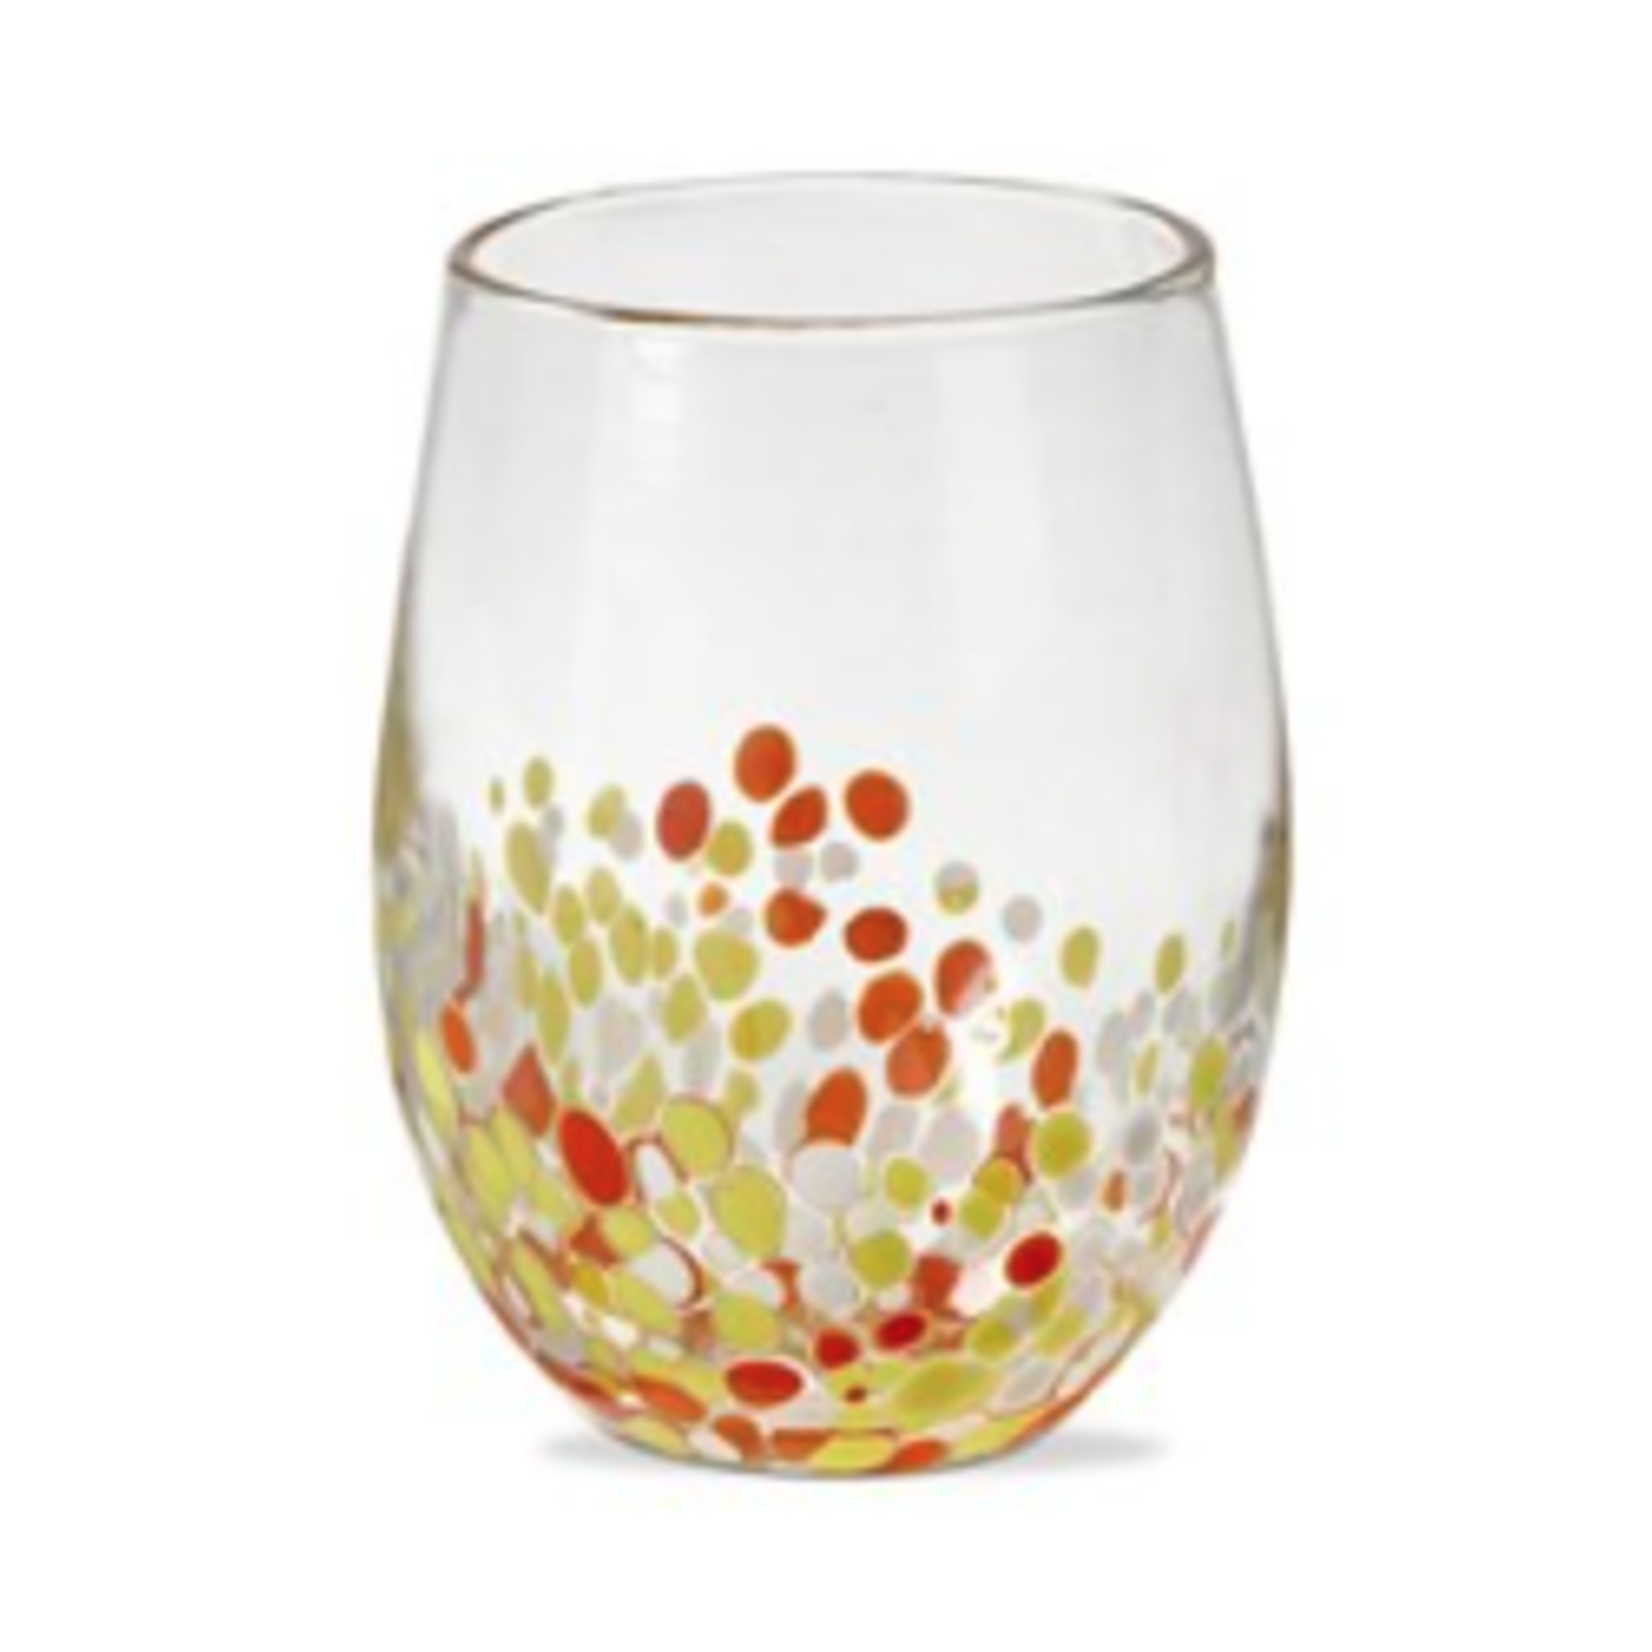 Tag Stemless Wine Glass, Pebbles Orange Yellow